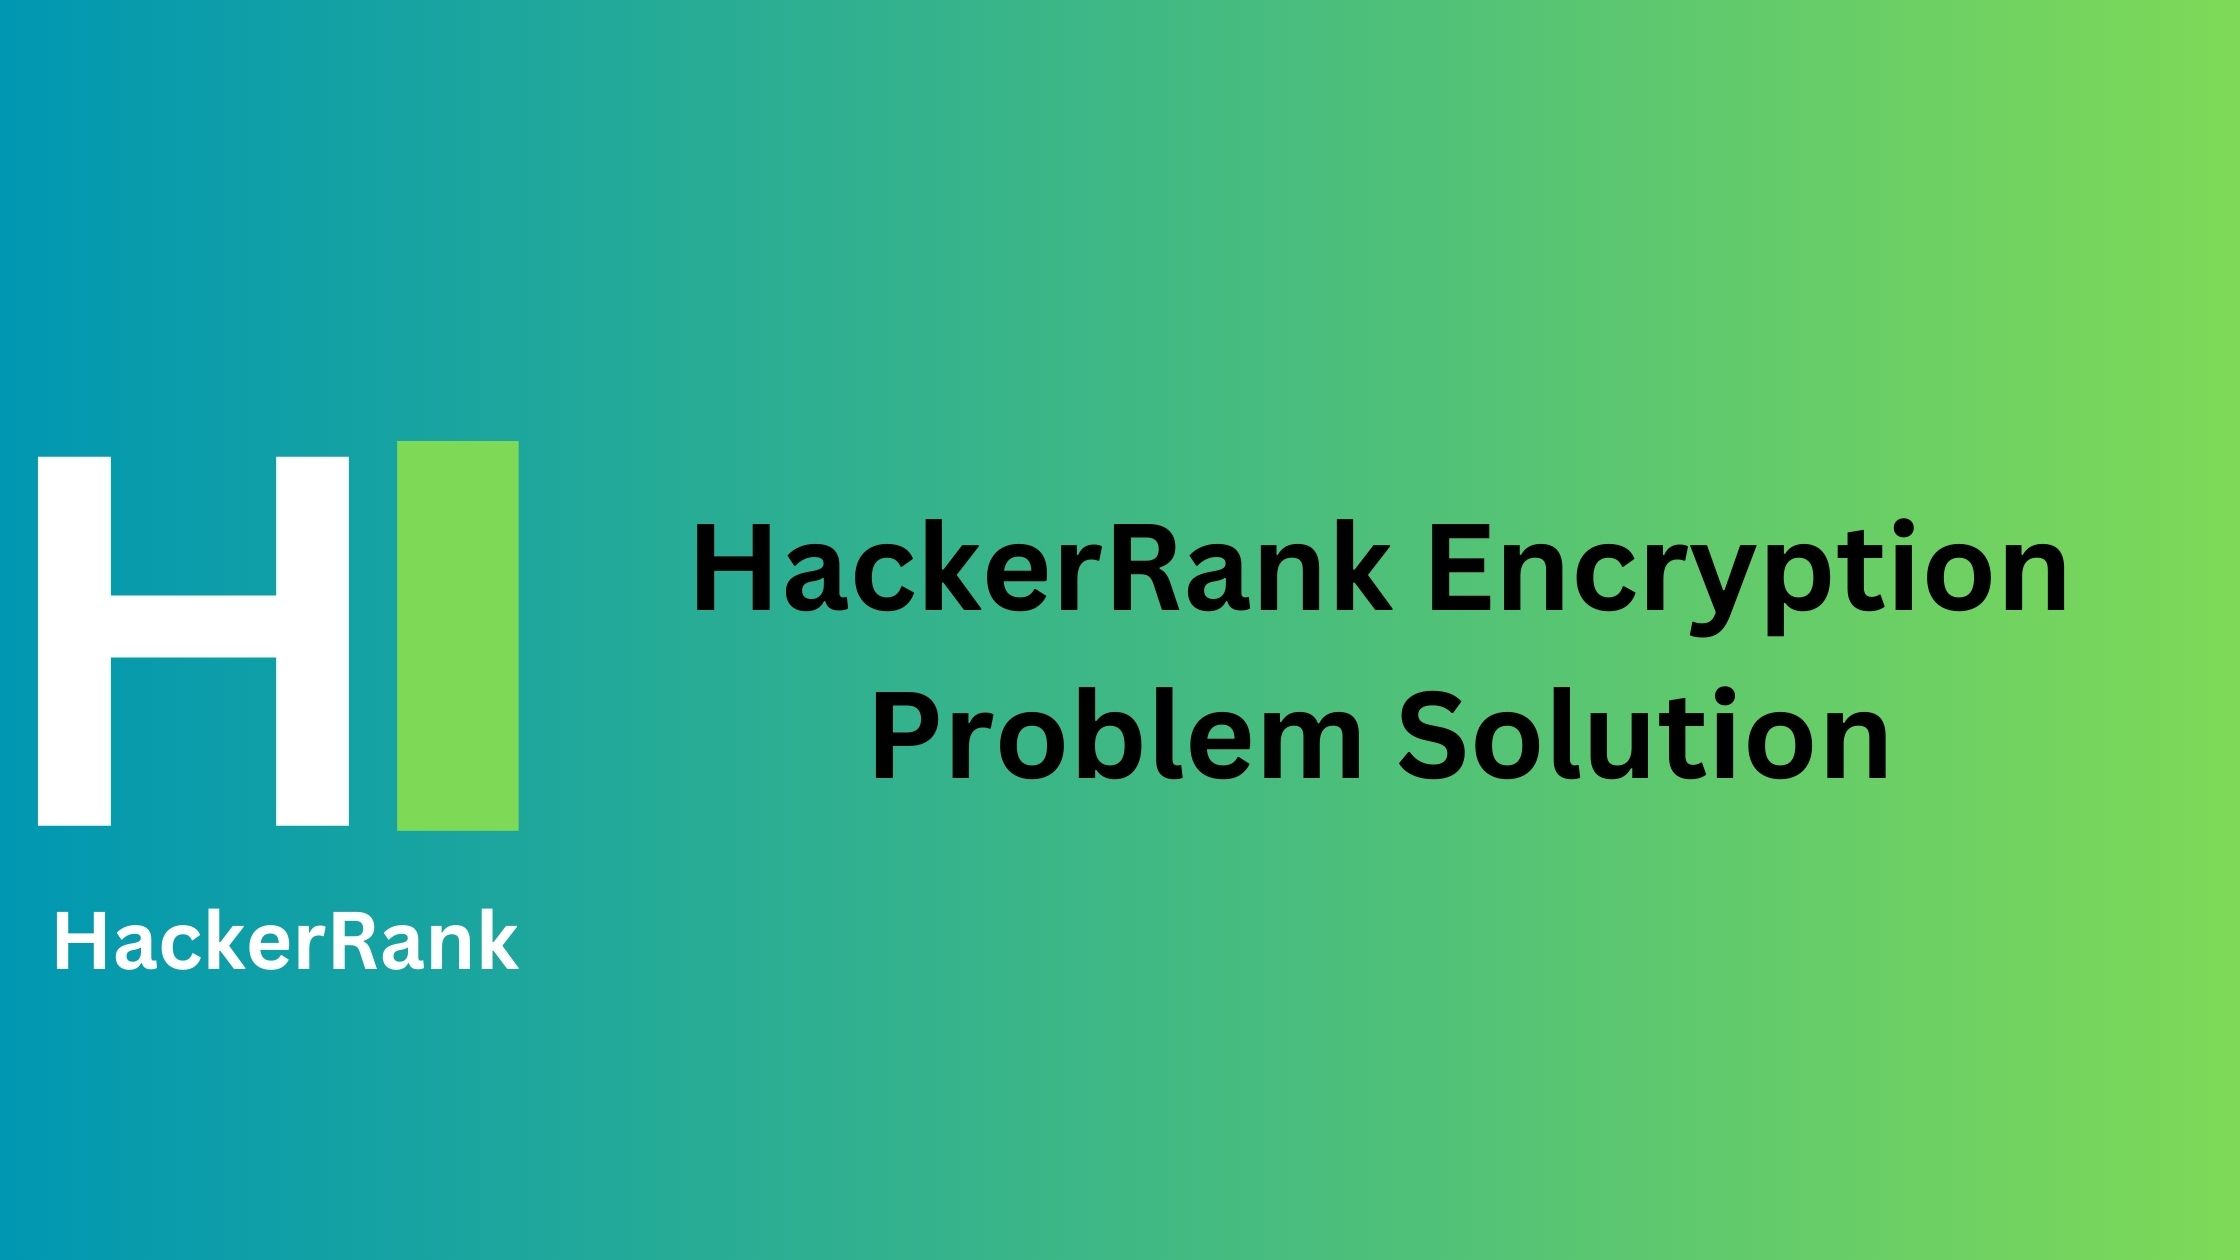 HackerRank Encryption Problem Solution